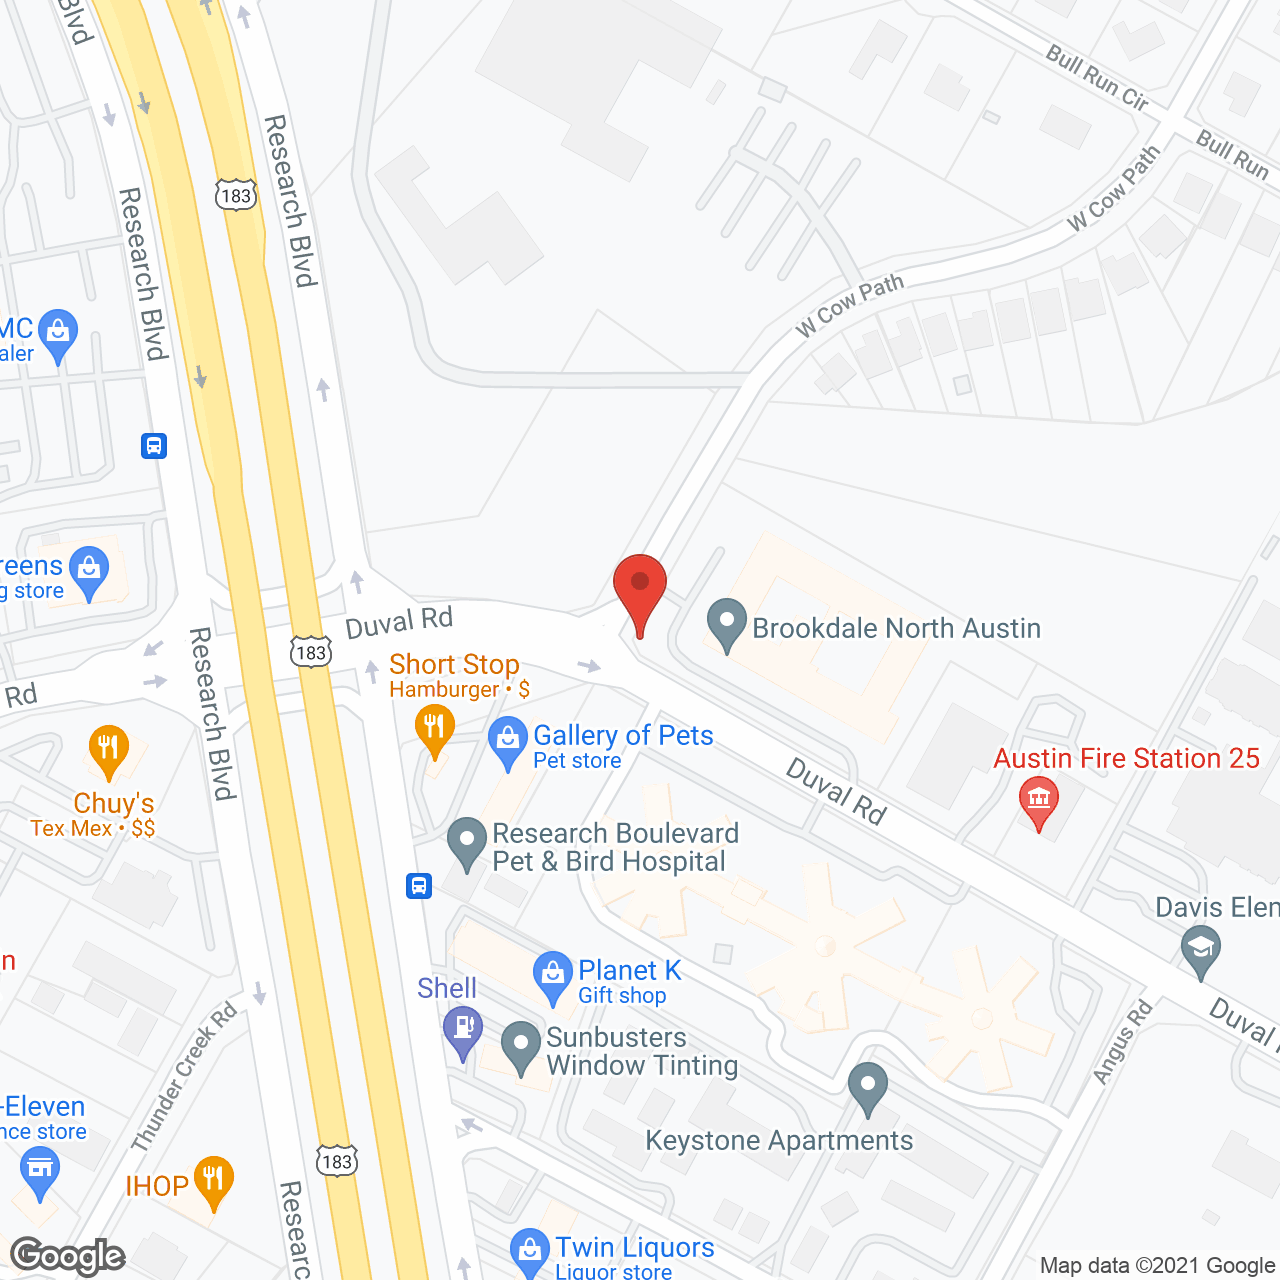 Brookdale North Austin in google map